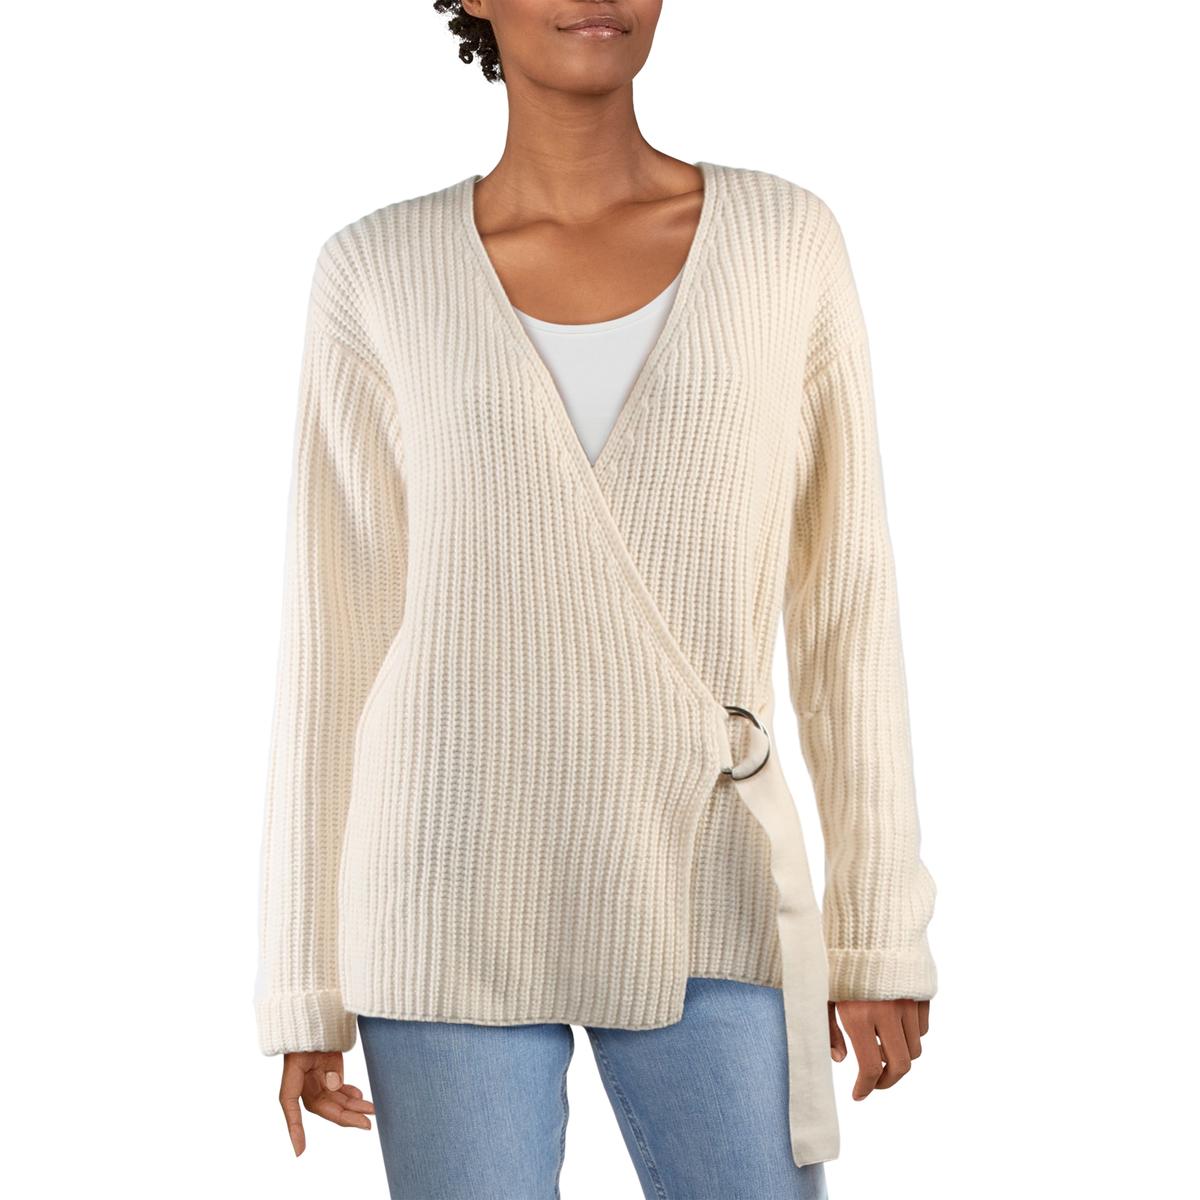 Matty M Womens Knit Long Sleeves V-Neck Wrap Sweater Top BHFO 9985 | eBay